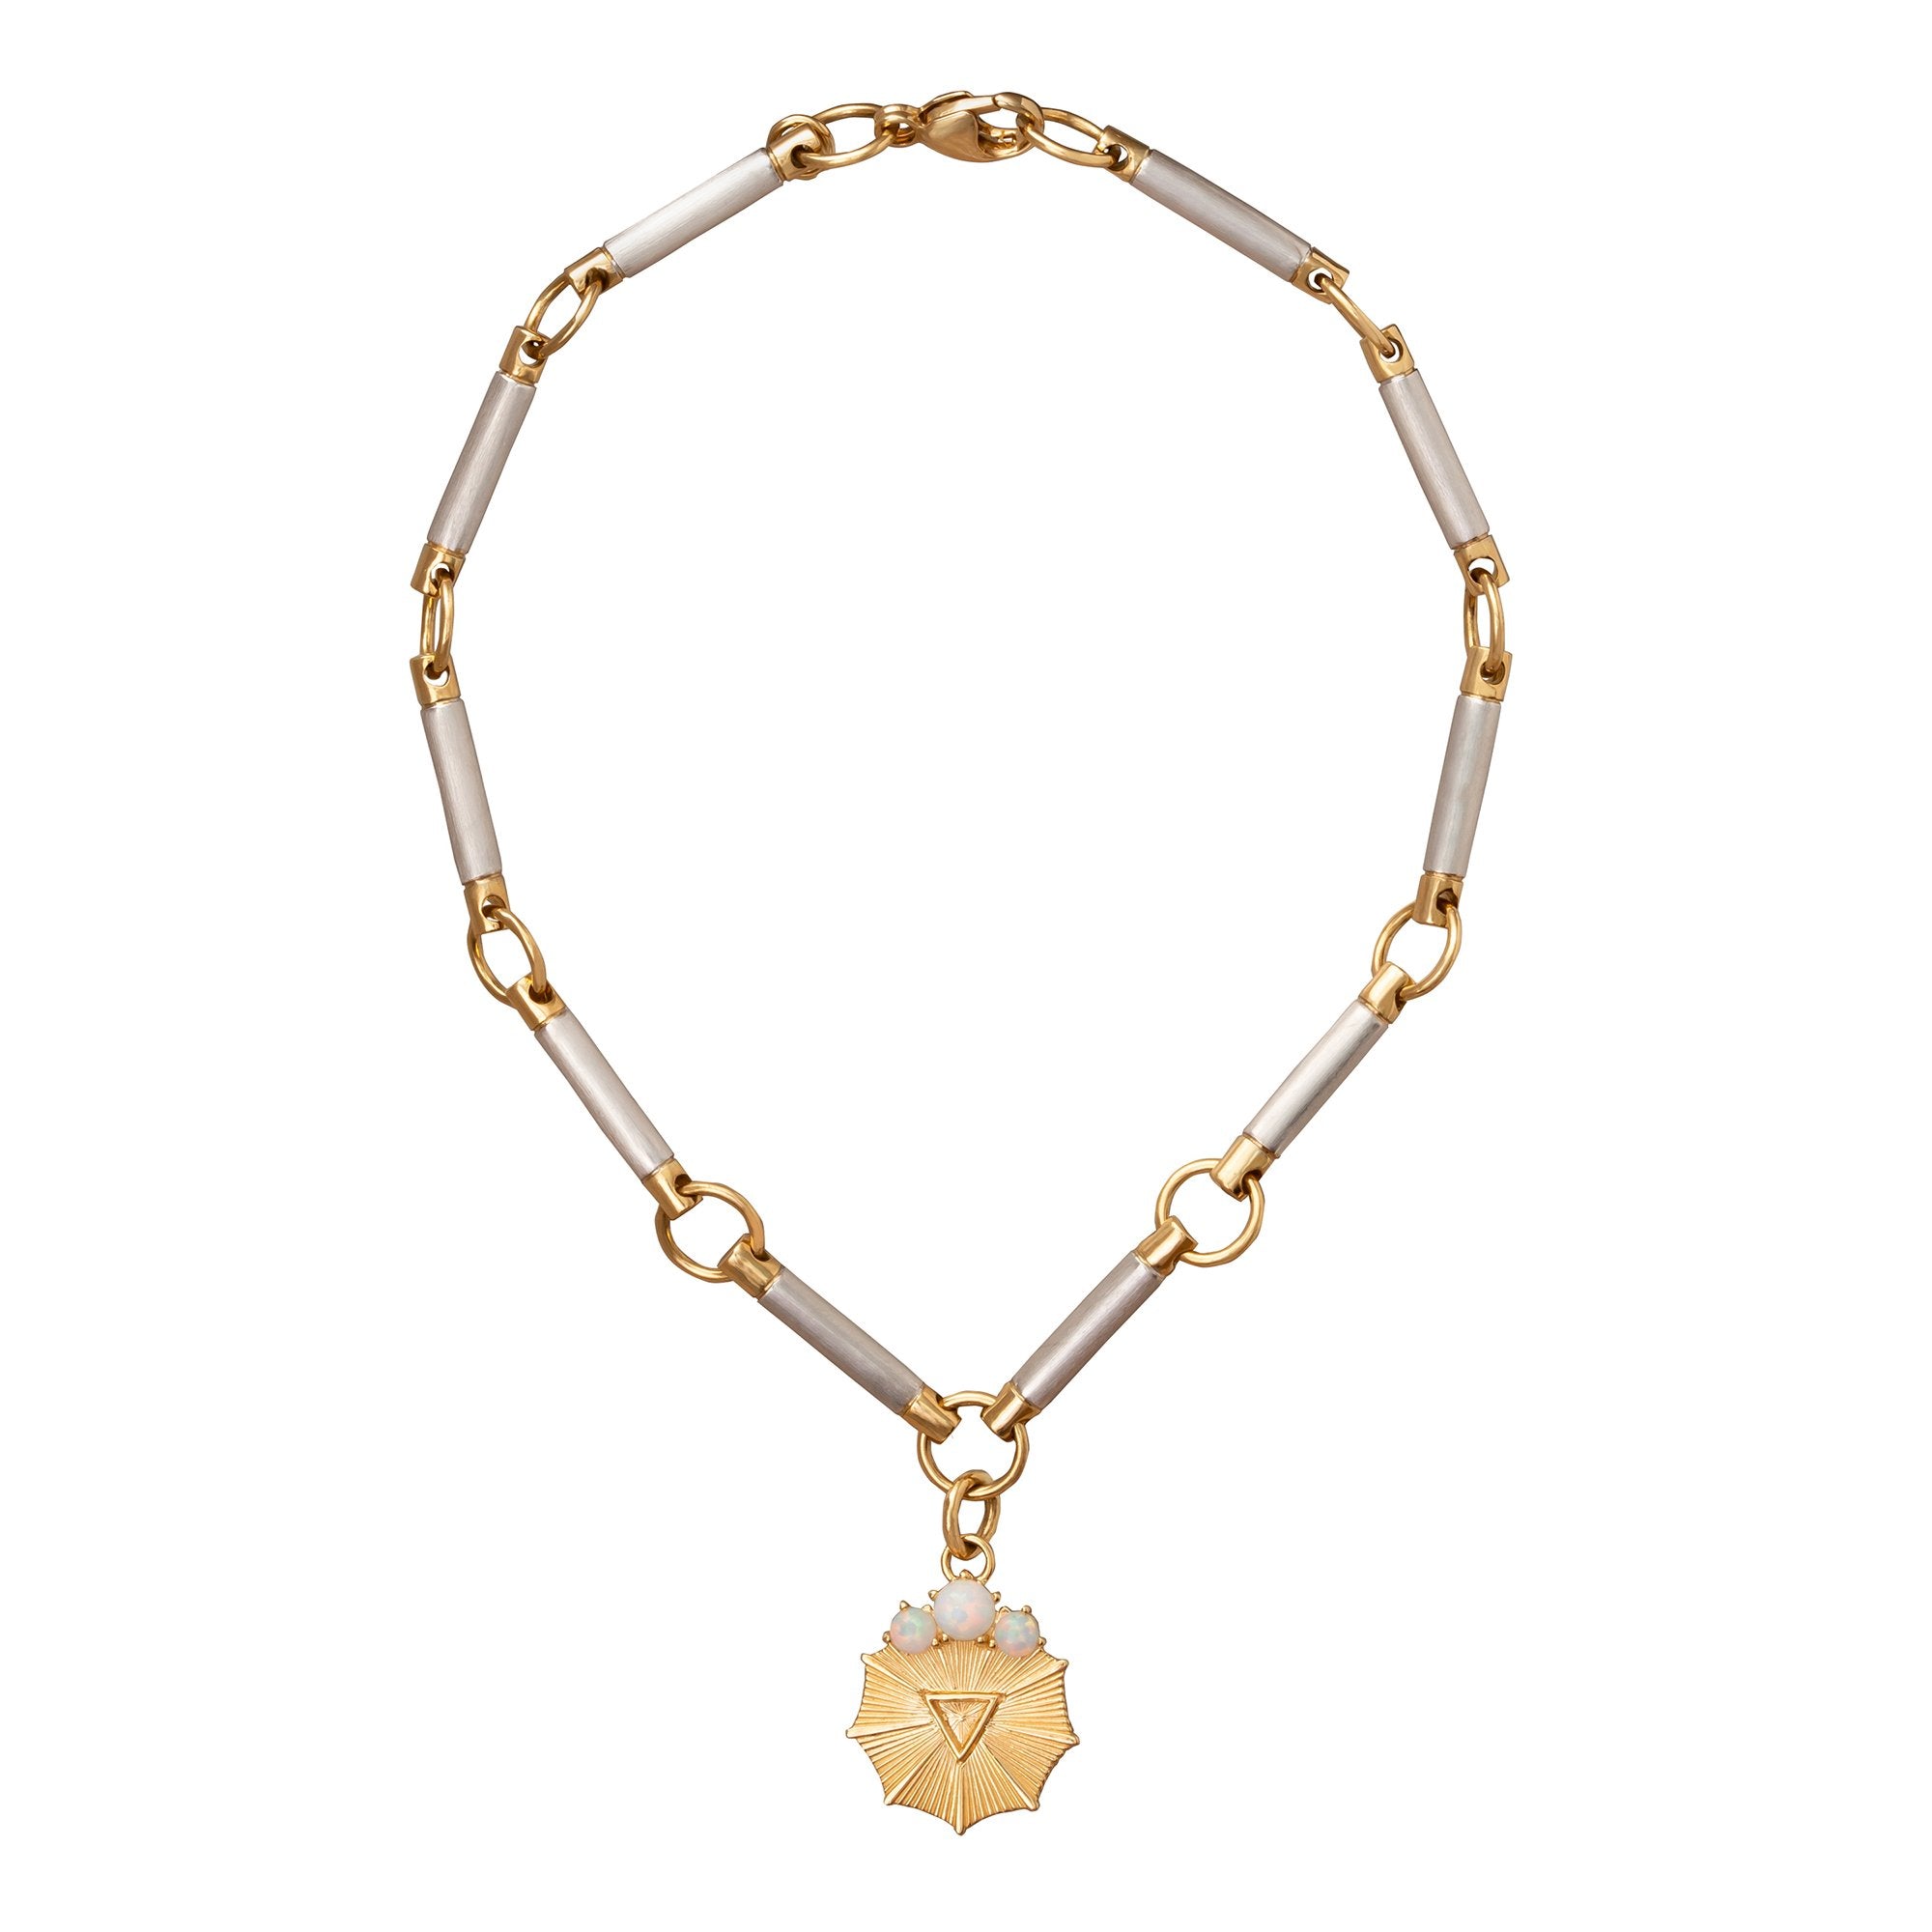 Buy Free Shipping [Jewelry] LOUIS VUITTON Louis Vuitton Bracelet